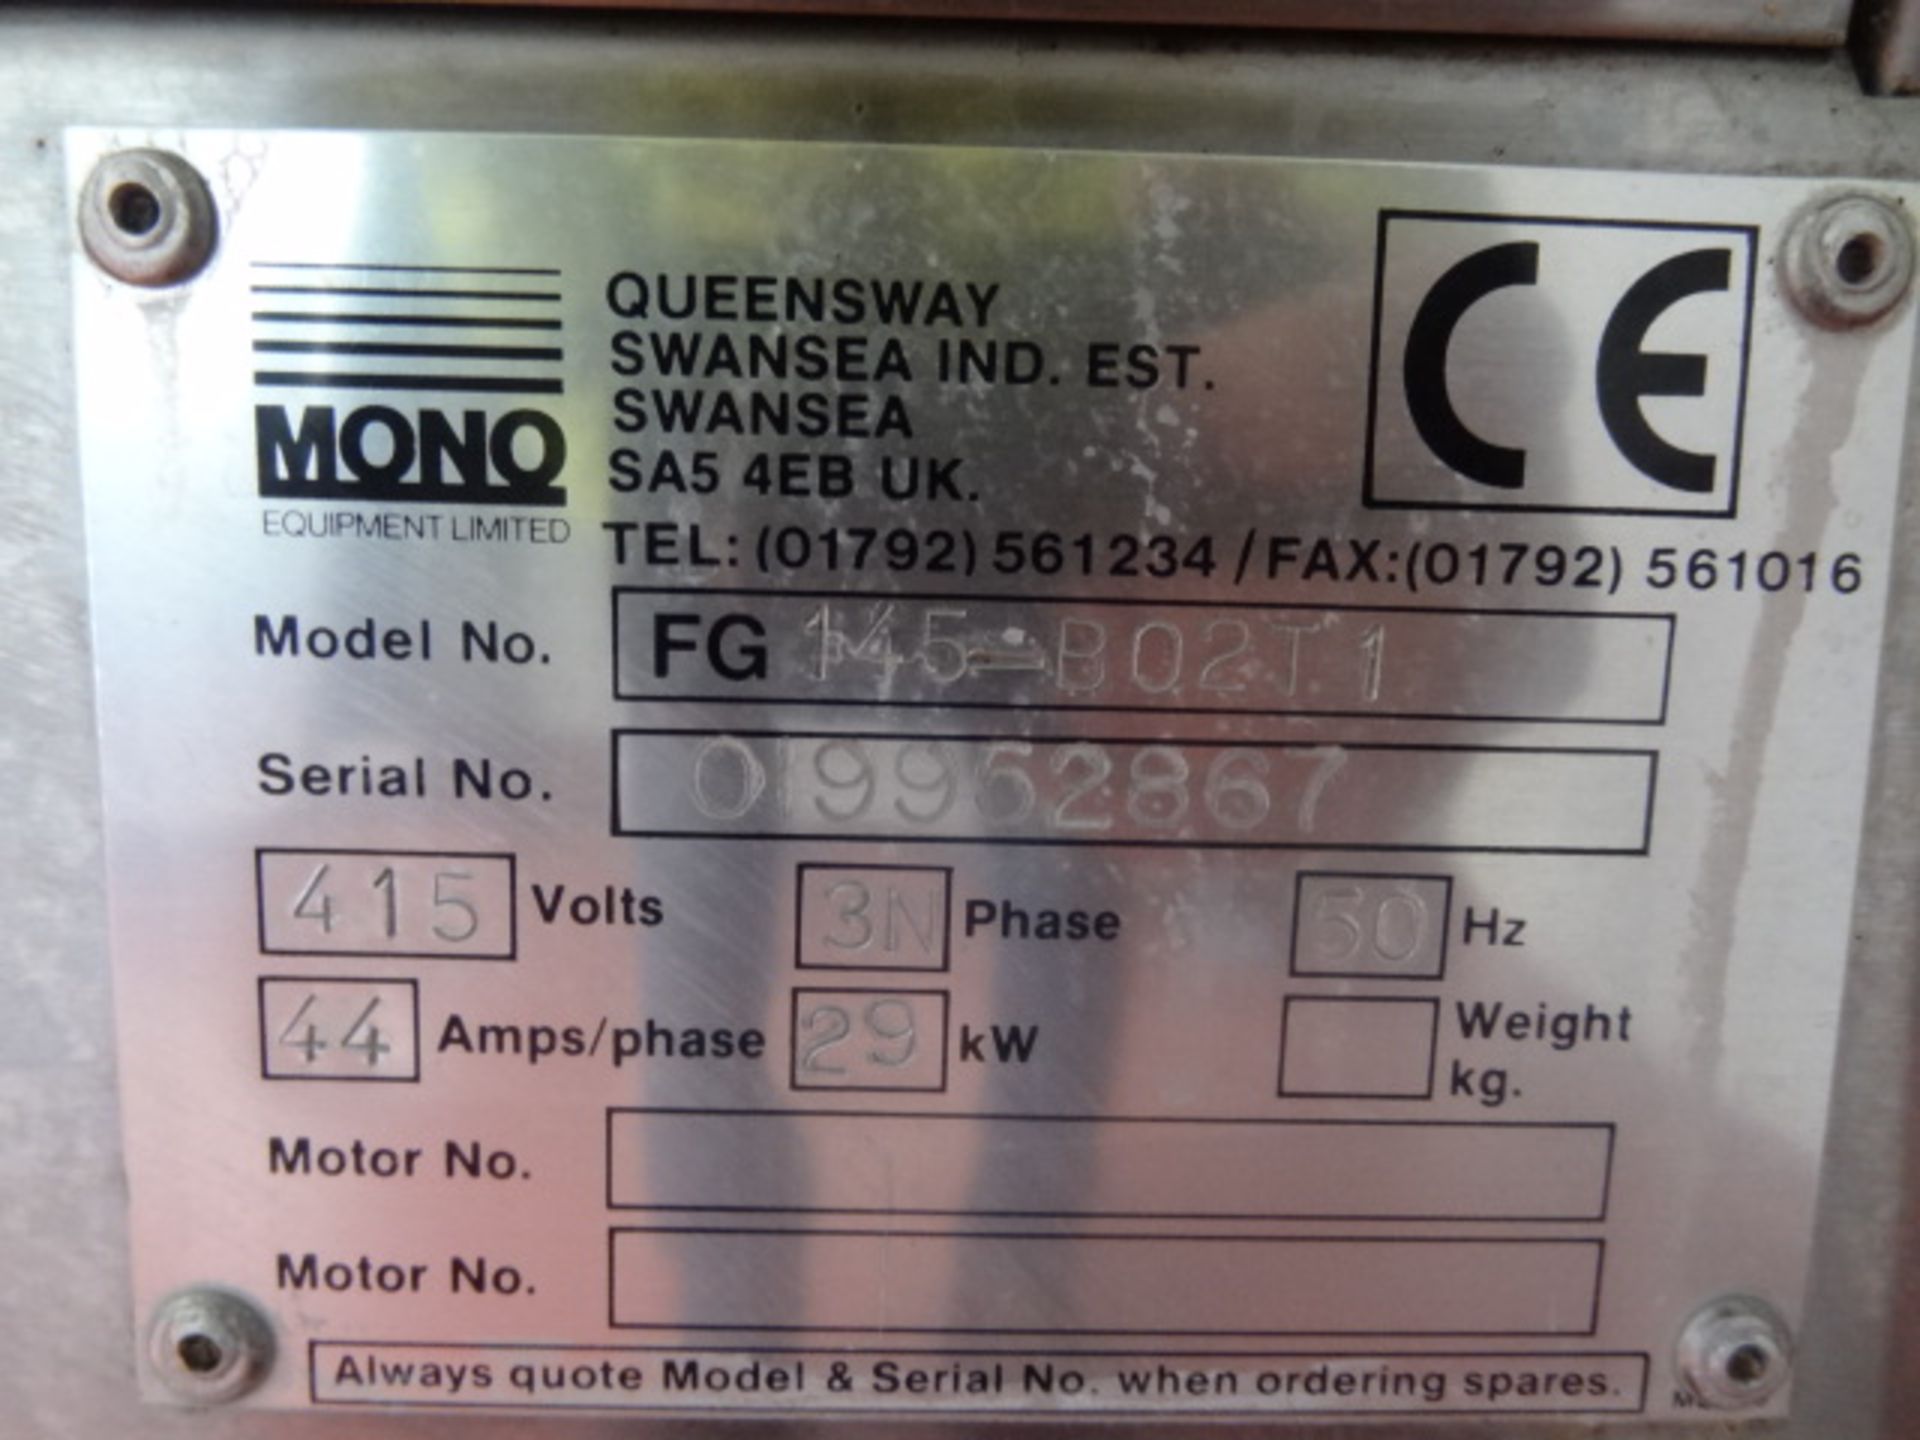 Mono DX 3 Deck Oven - Image 4 of 8